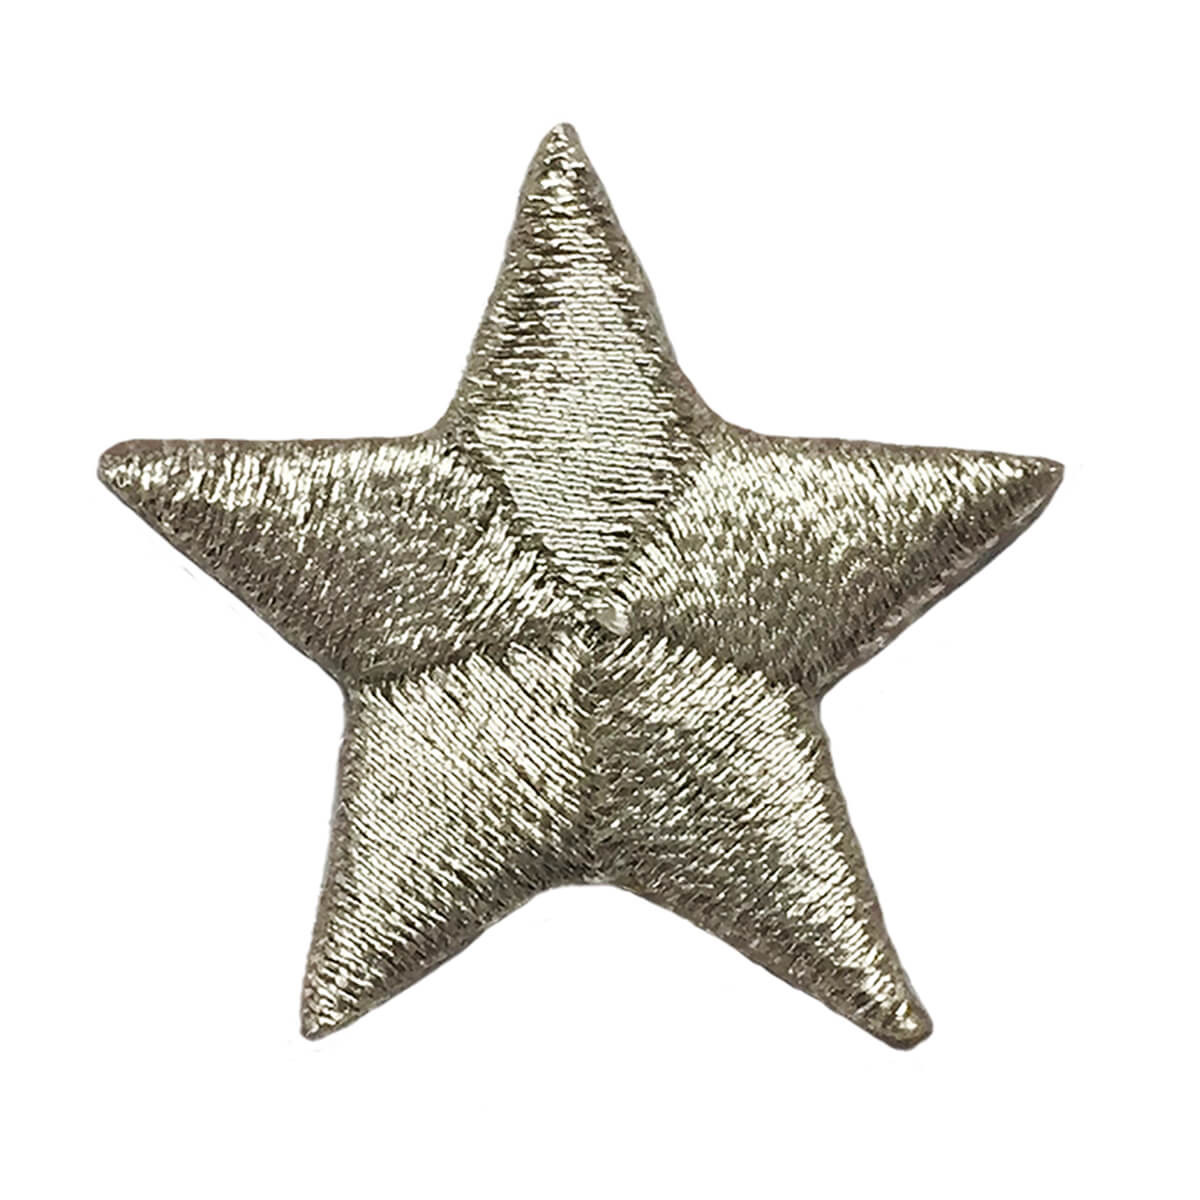 Star - Silver Honor Award